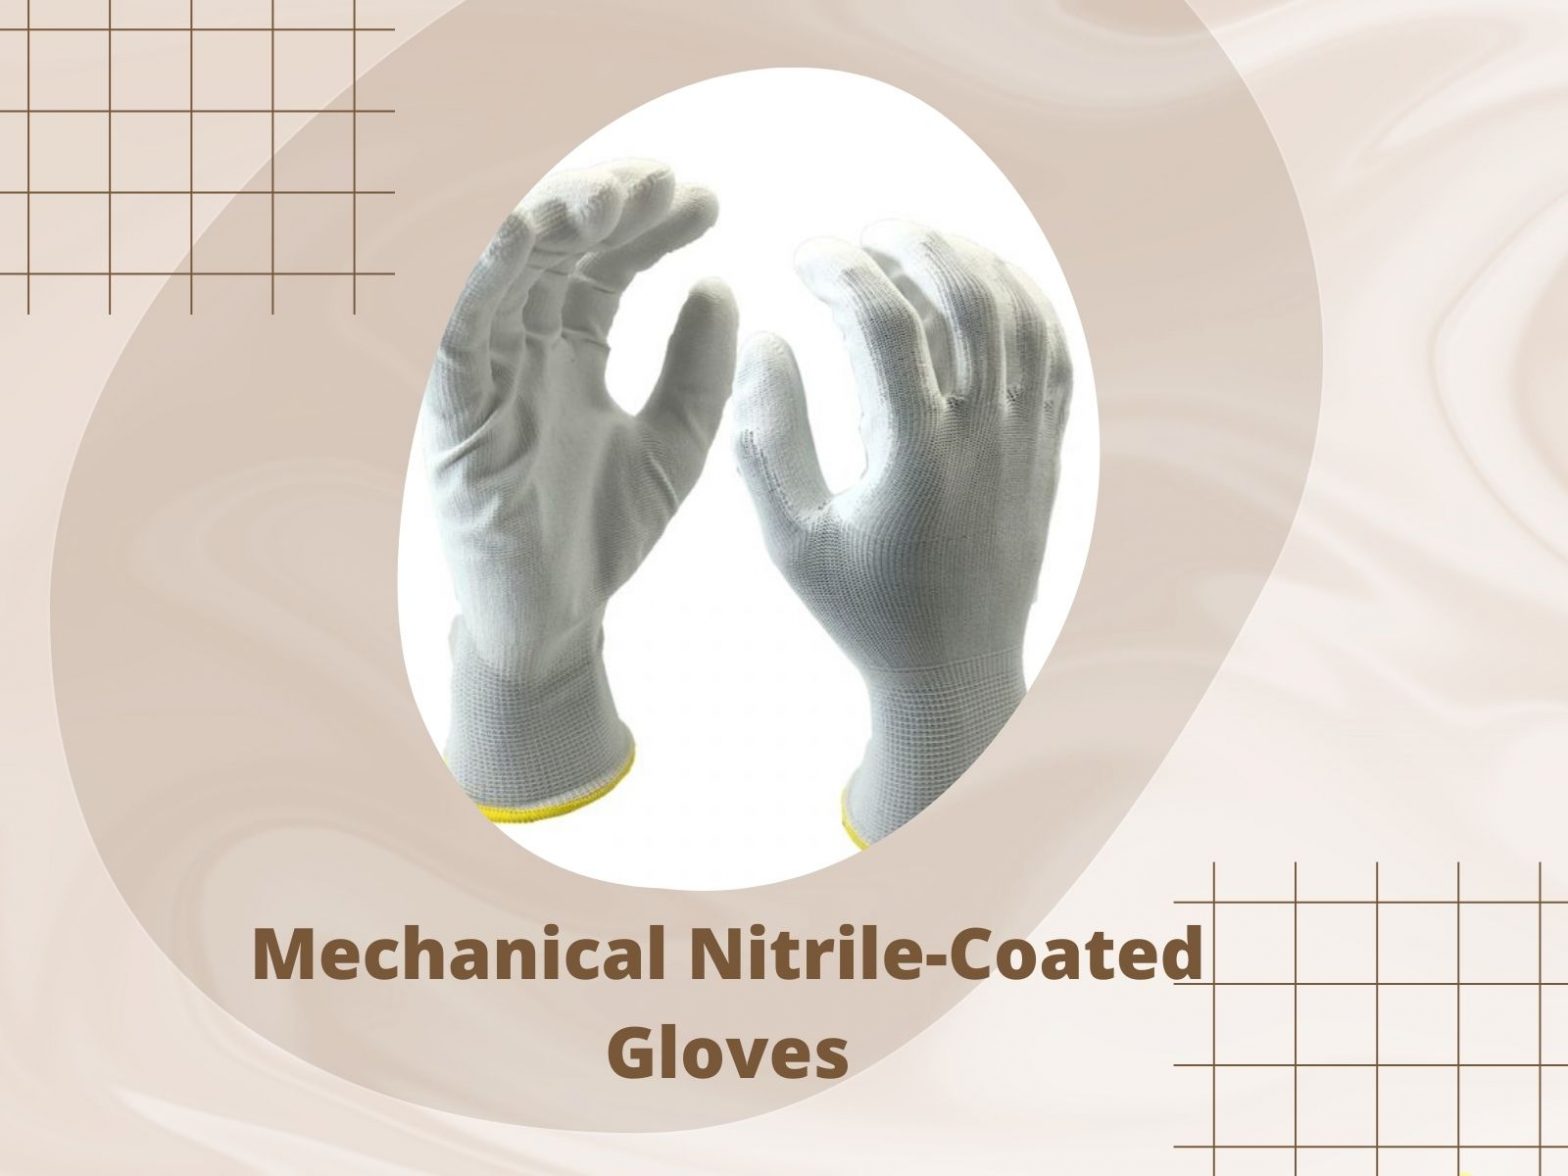 Mechanical Nitrile-Coated Gloves